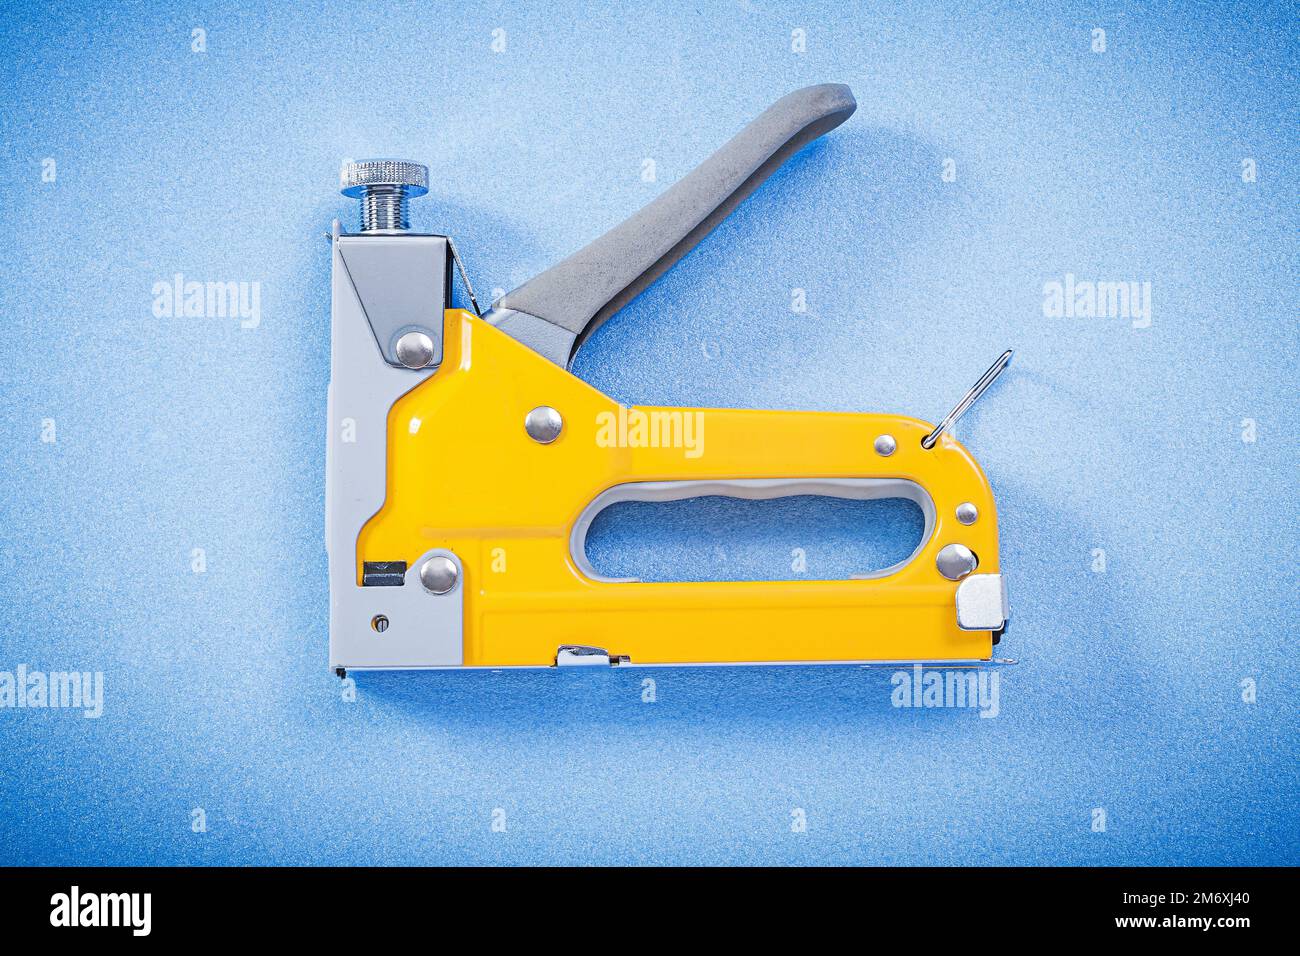 Construction stapler on blue background horizontal view. Stock Photo